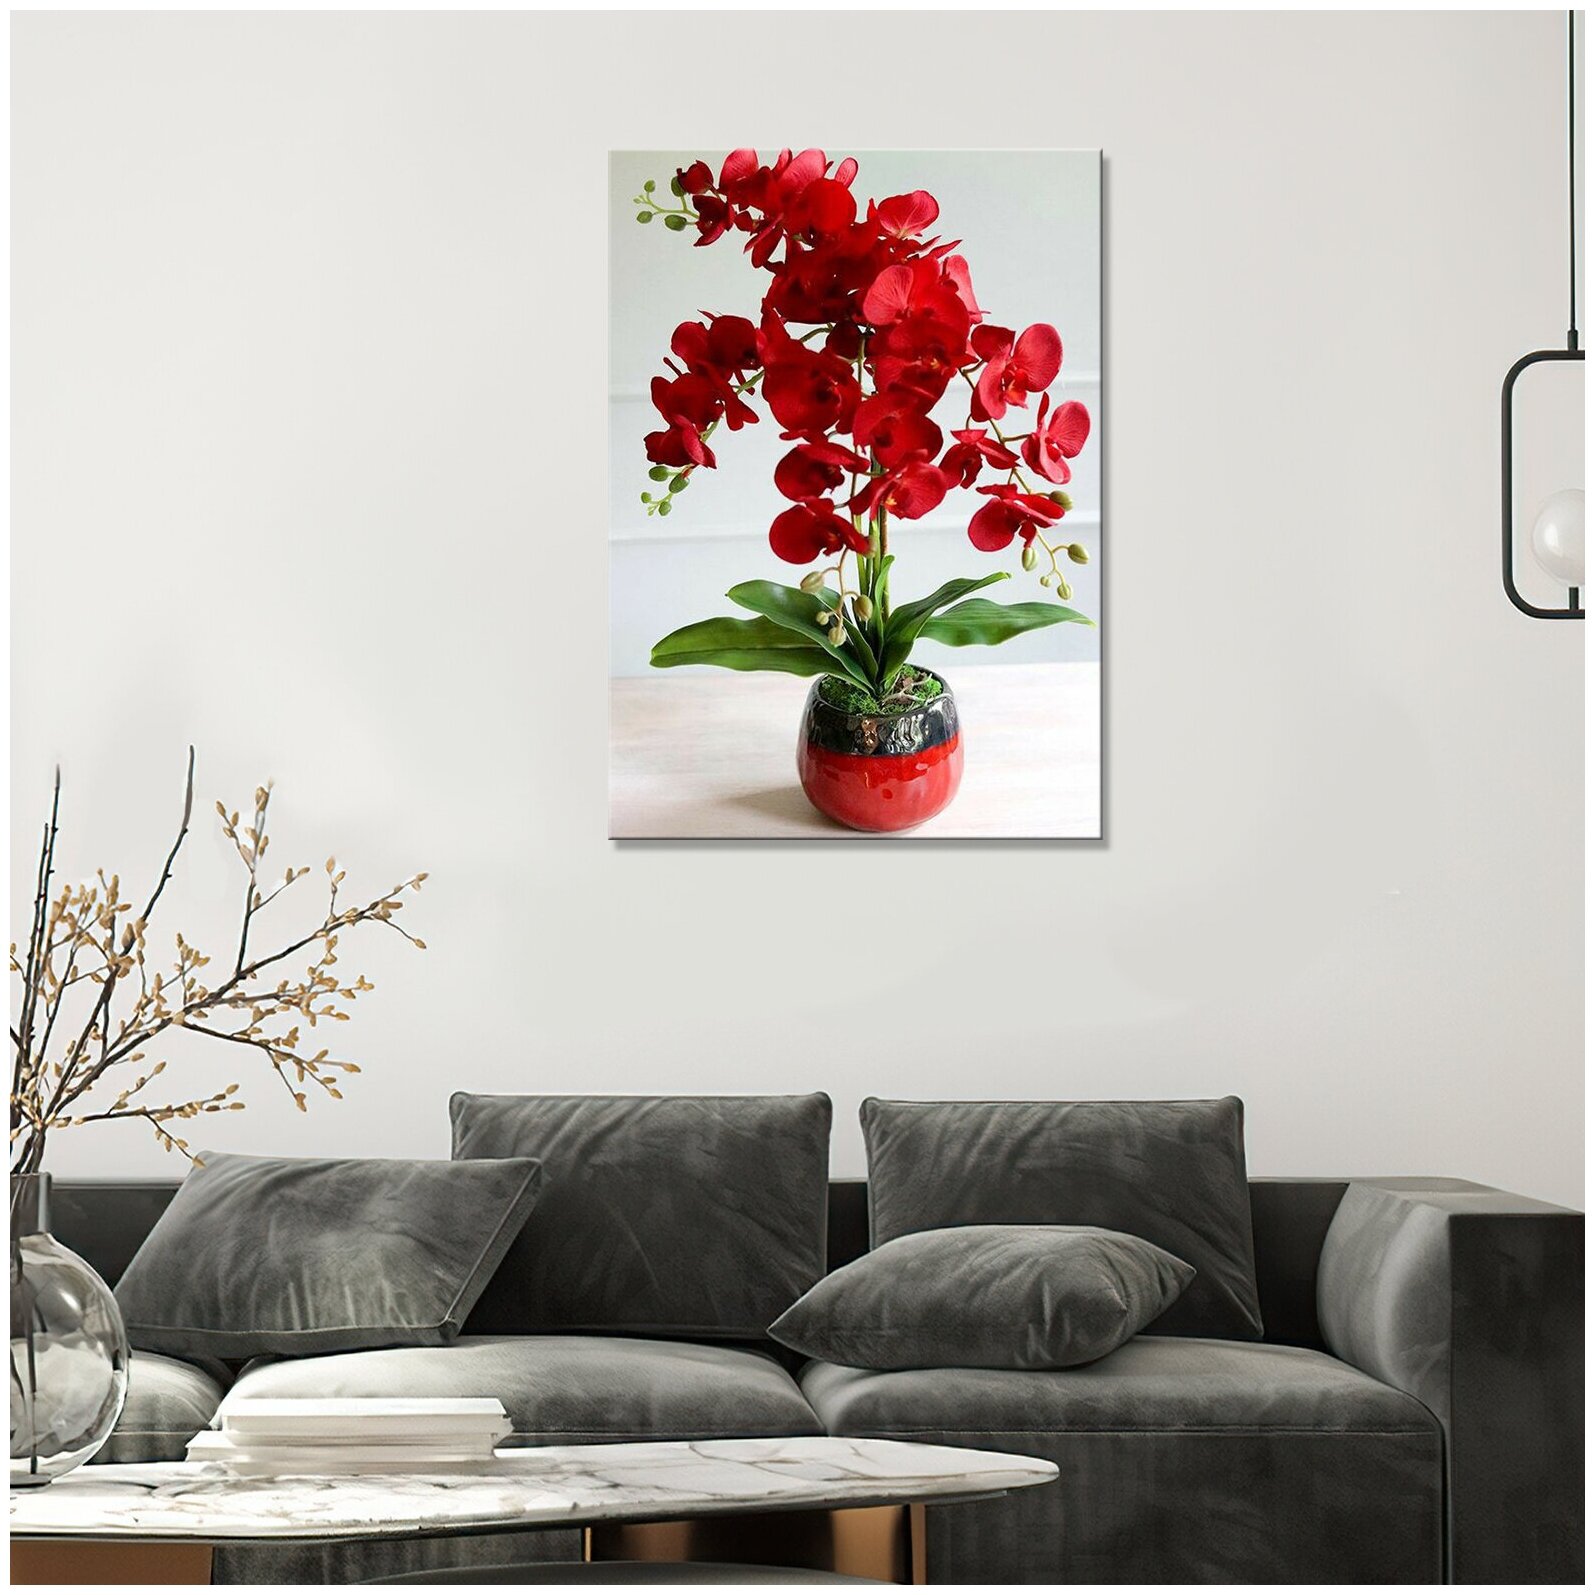 Интерьерная картина на холсте / картина на стену - Ярко-красная орхидея фенилопсис 20х30